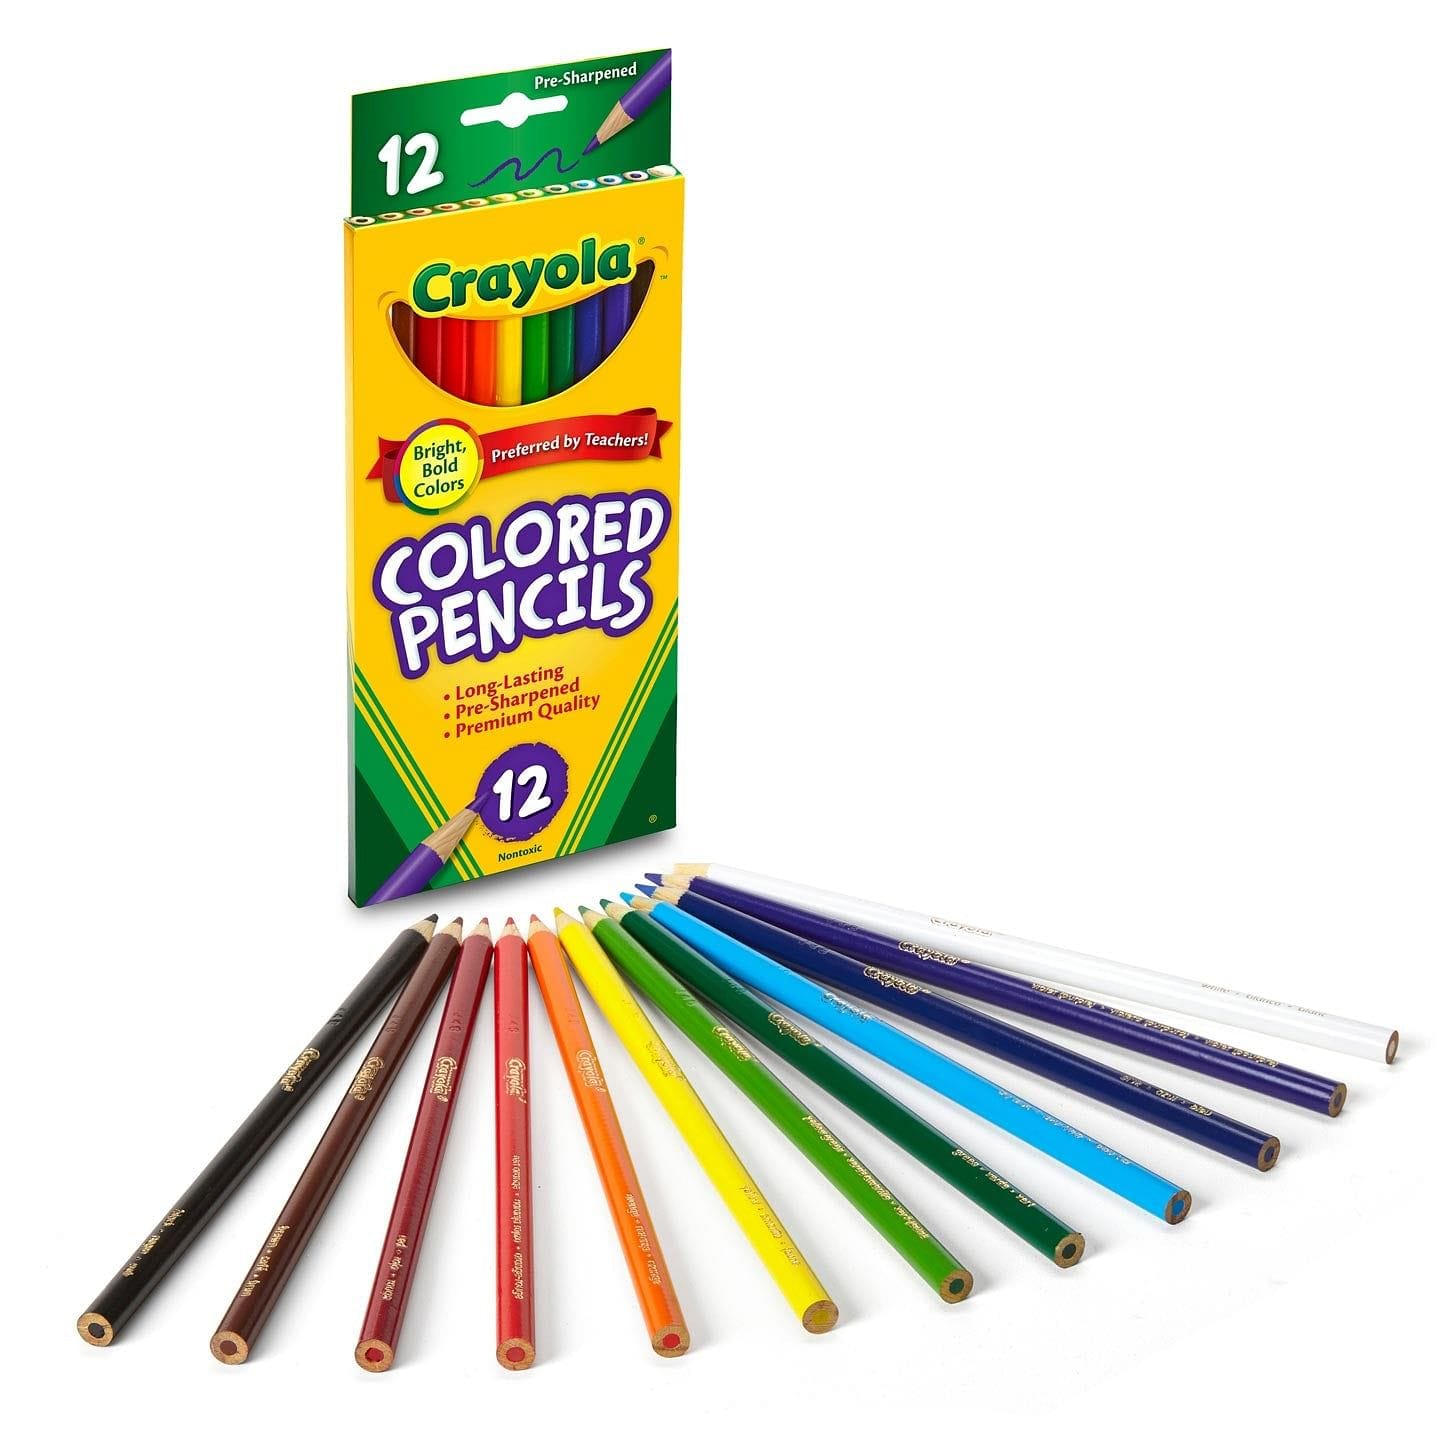 Brilliant Color Crayons - 24 Count